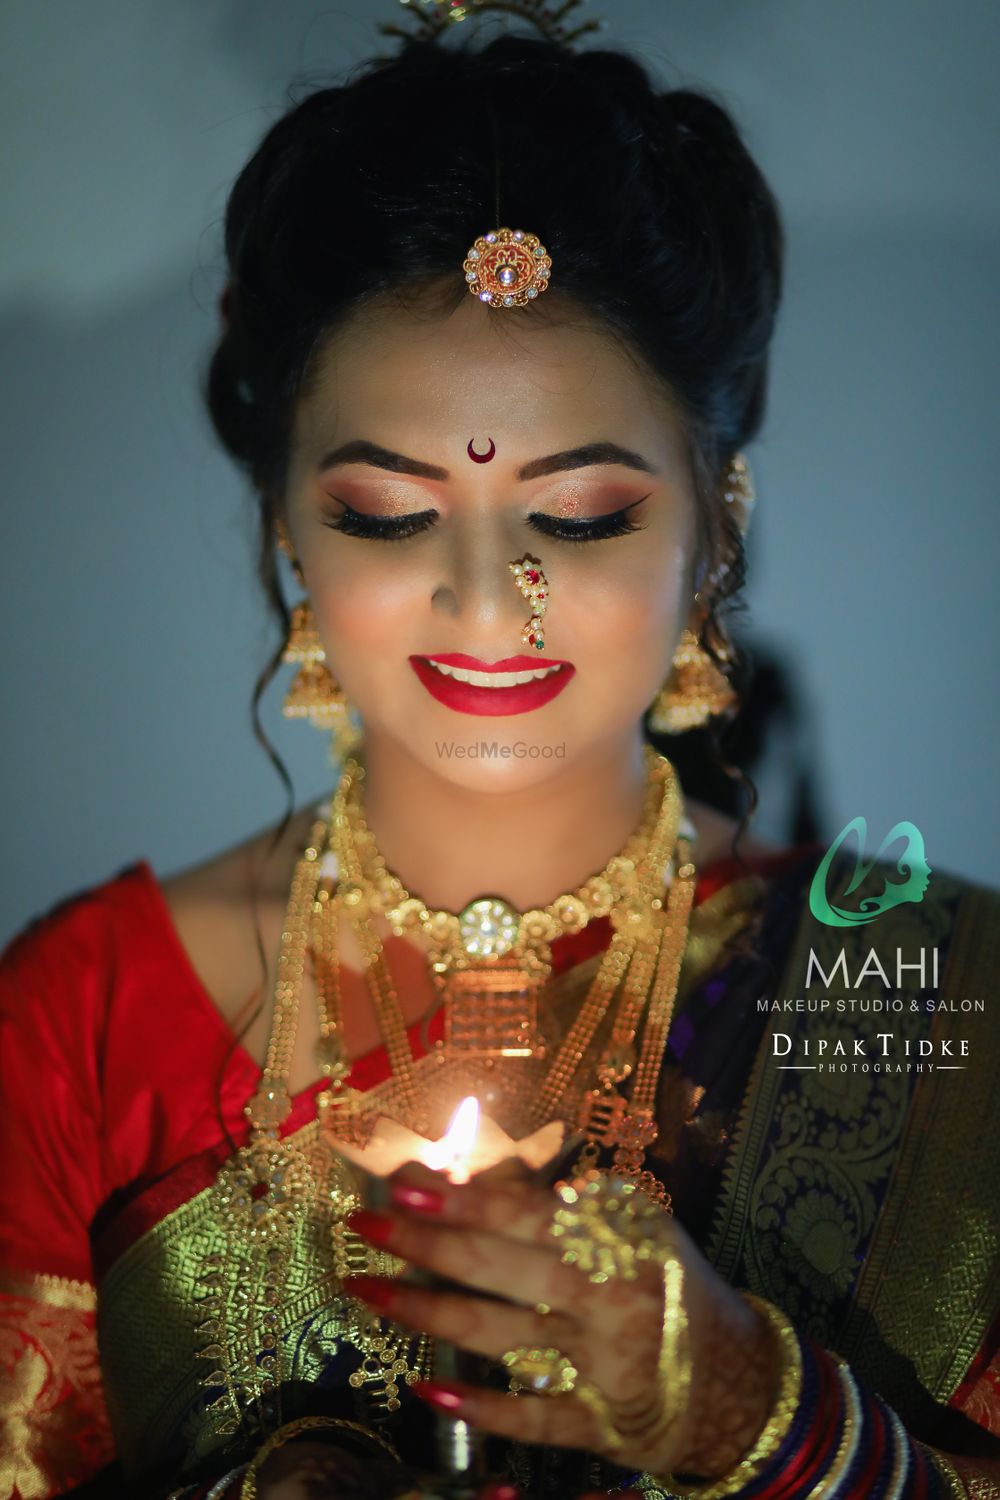 Photo From Maharashtrian Brides - By Mahi Makeup Studio and Salon